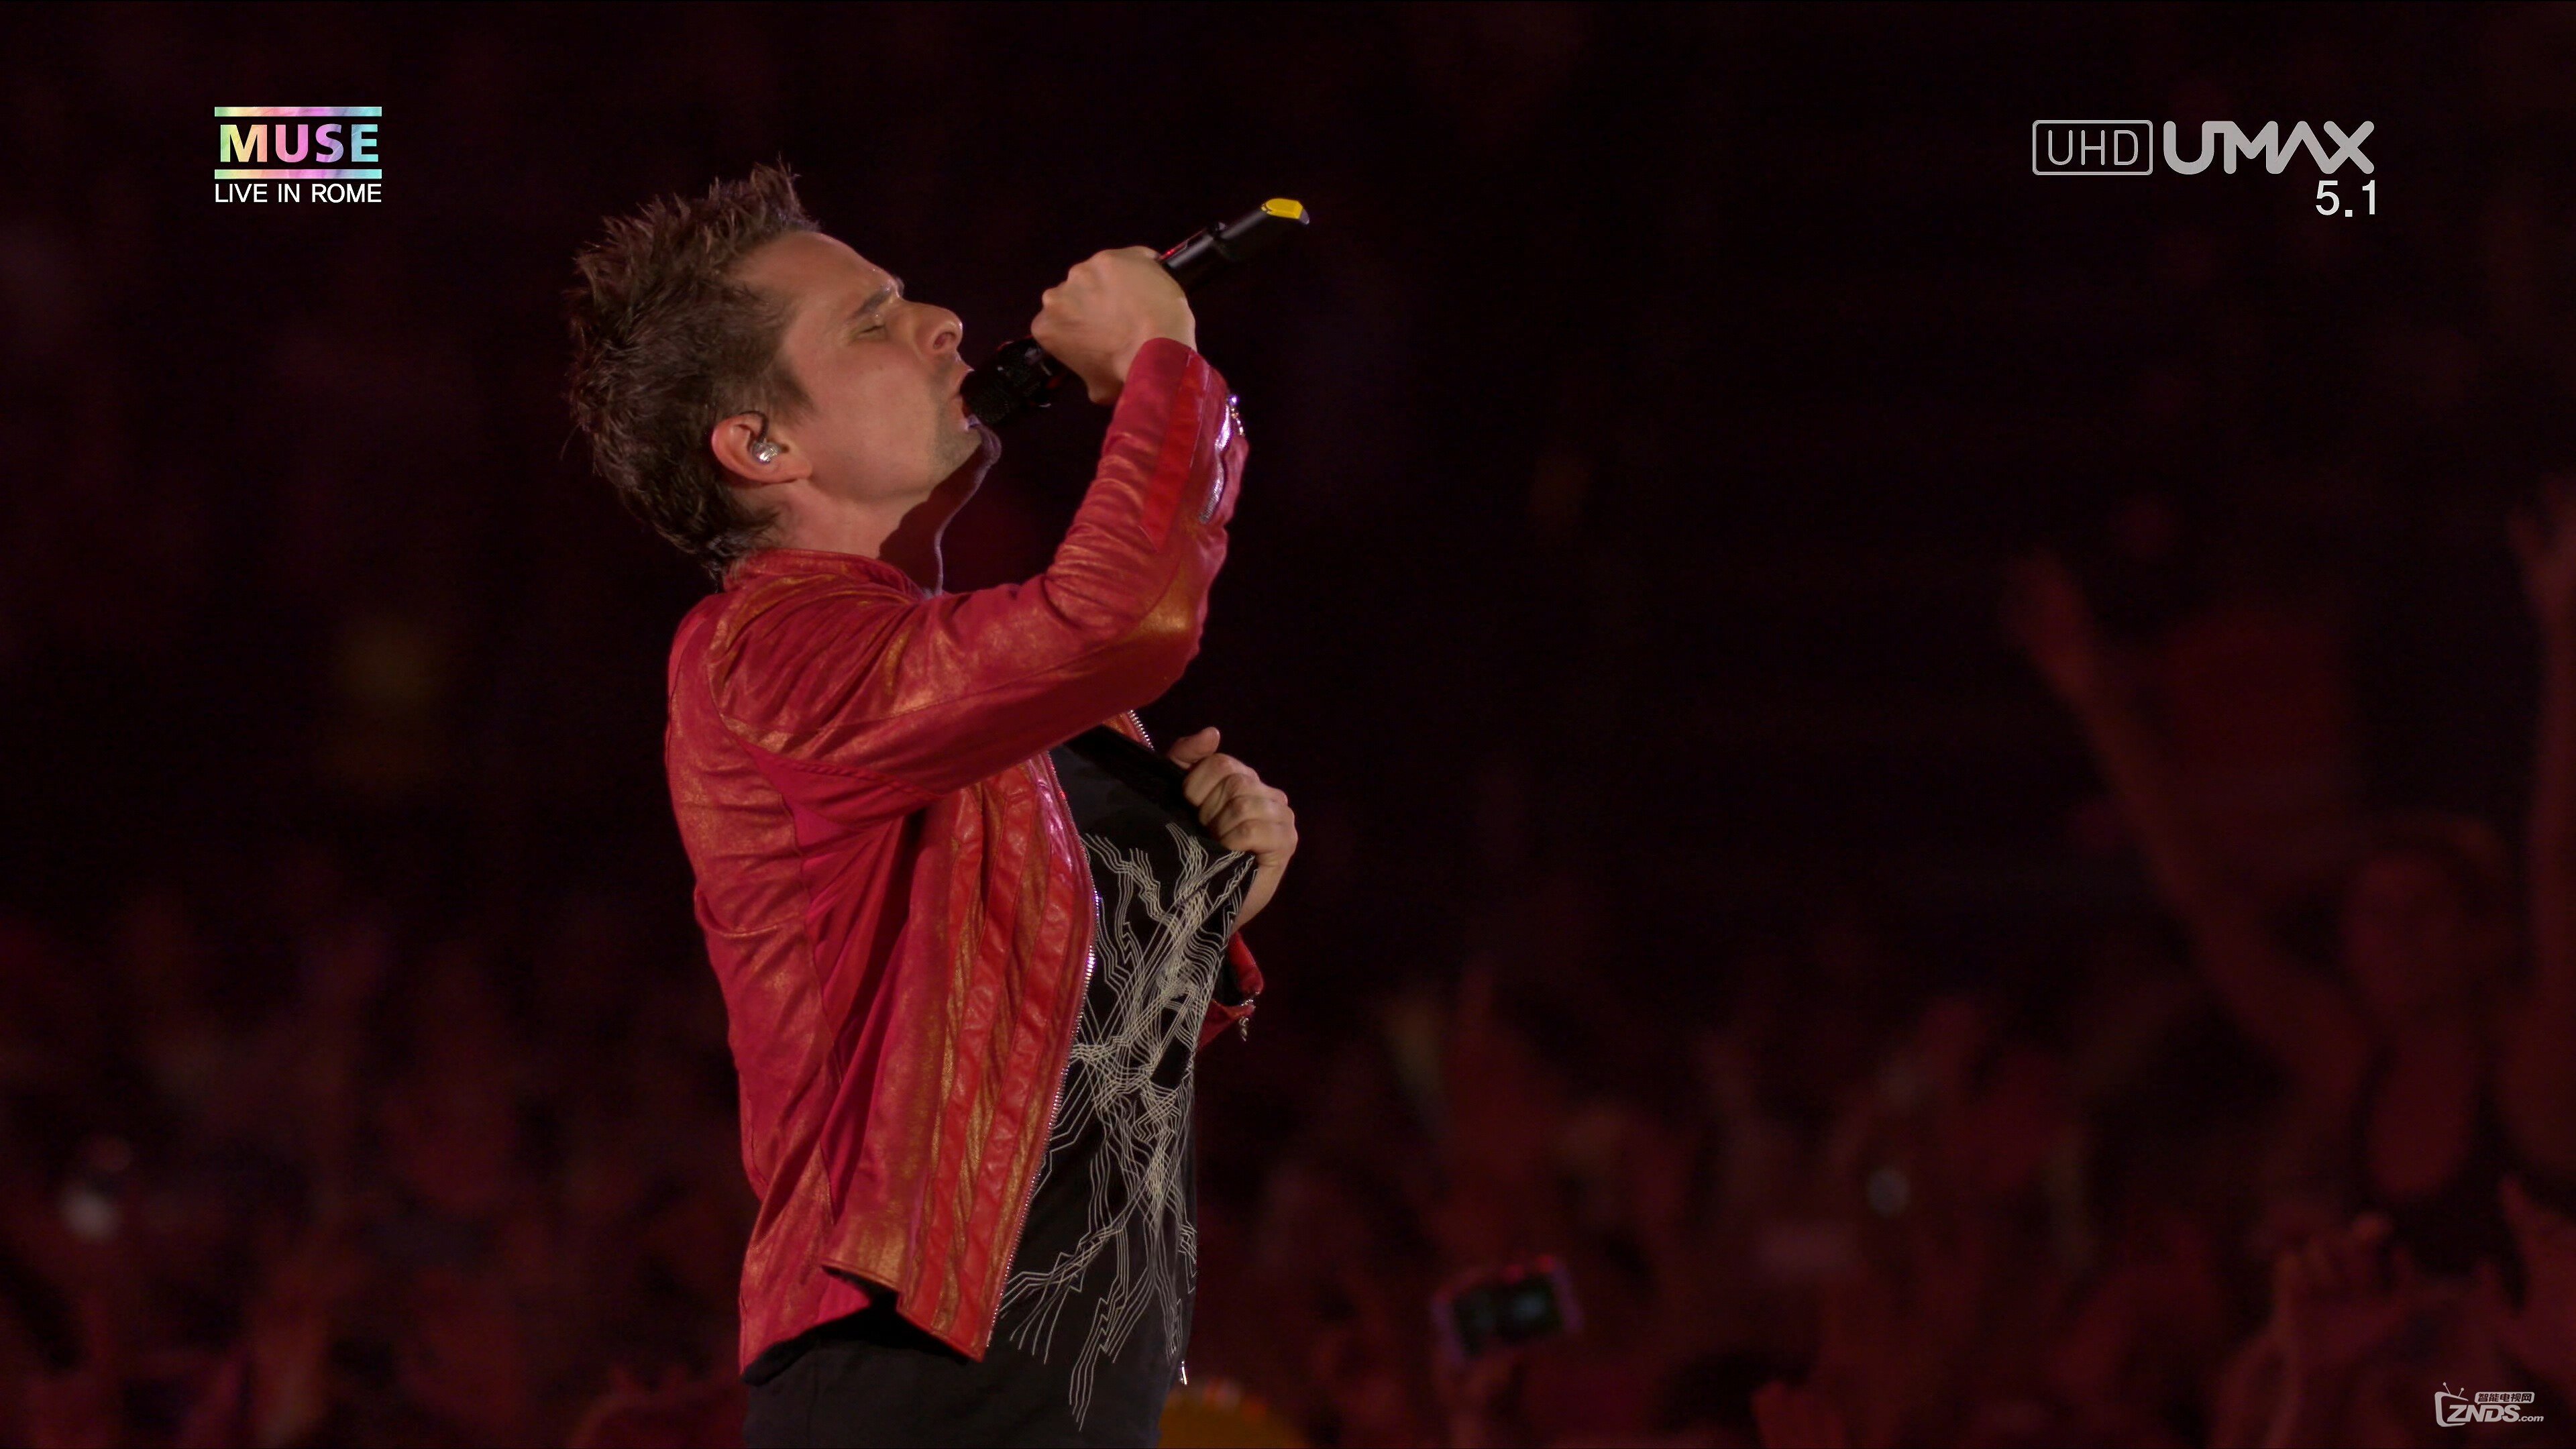 Muse.Live.At.Rome.Olympic.Stadium.2013.2160p.UHDTV.HEVC.mkv_20160313_001353.734.jpg